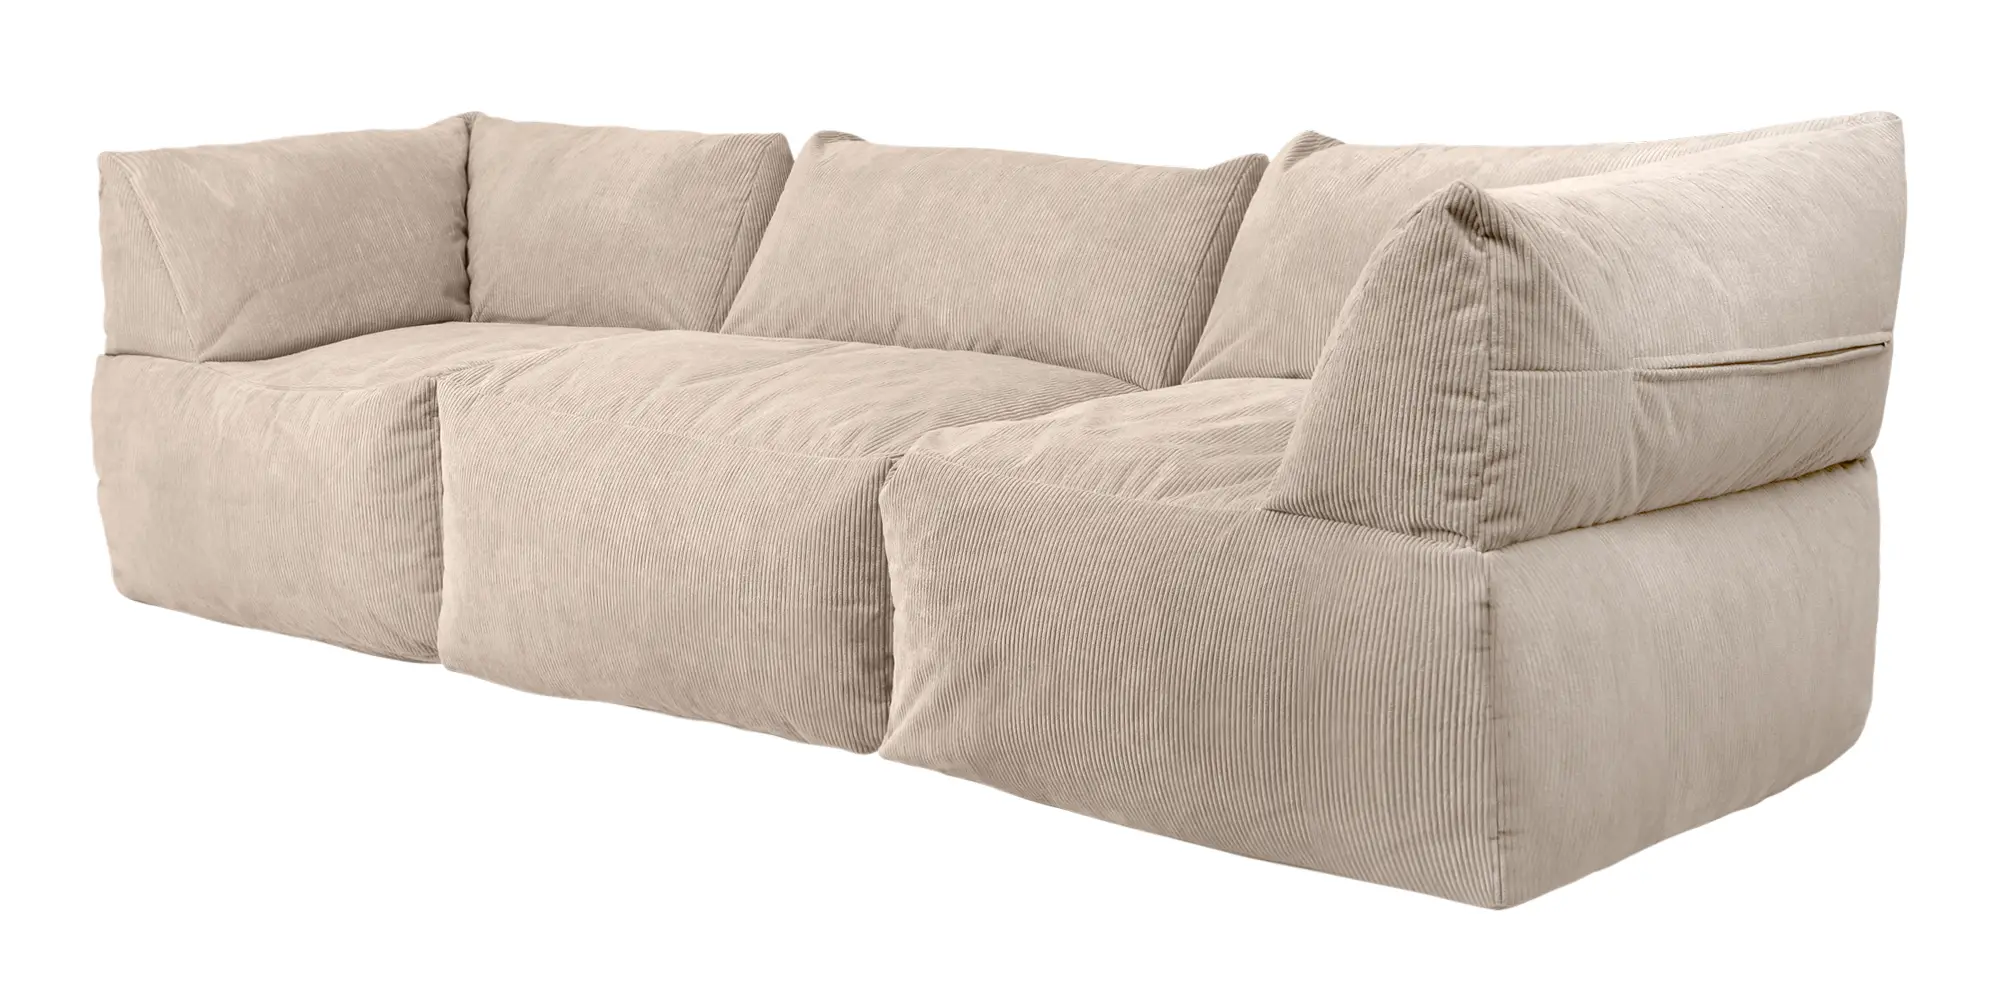 unvergleichlich Tetra 3pc Modulares Sofa